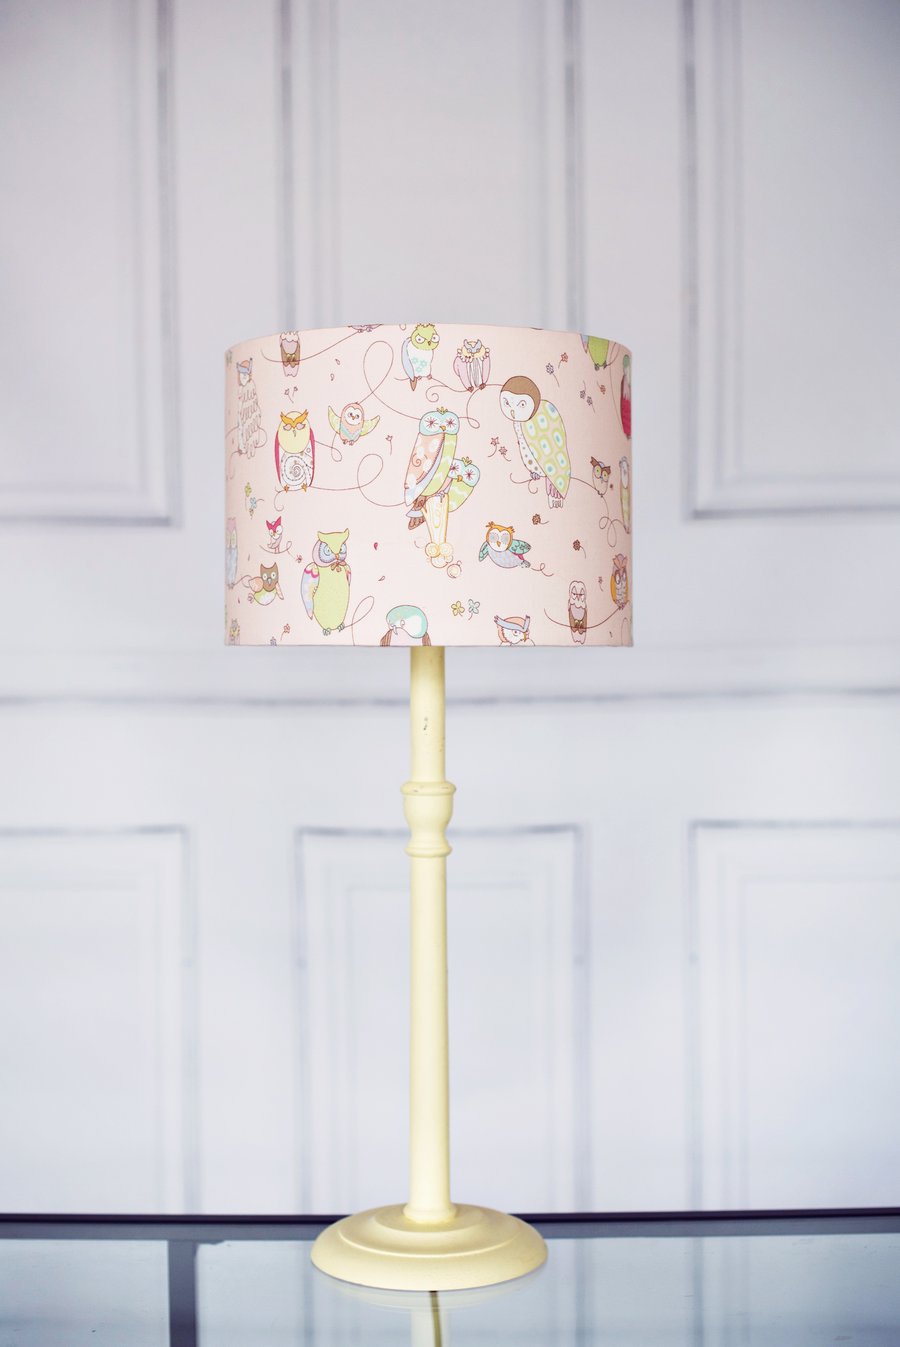 20 cm Pink owl lamp shade, lampshade, lamp shade, owl lampshade, owl lamp